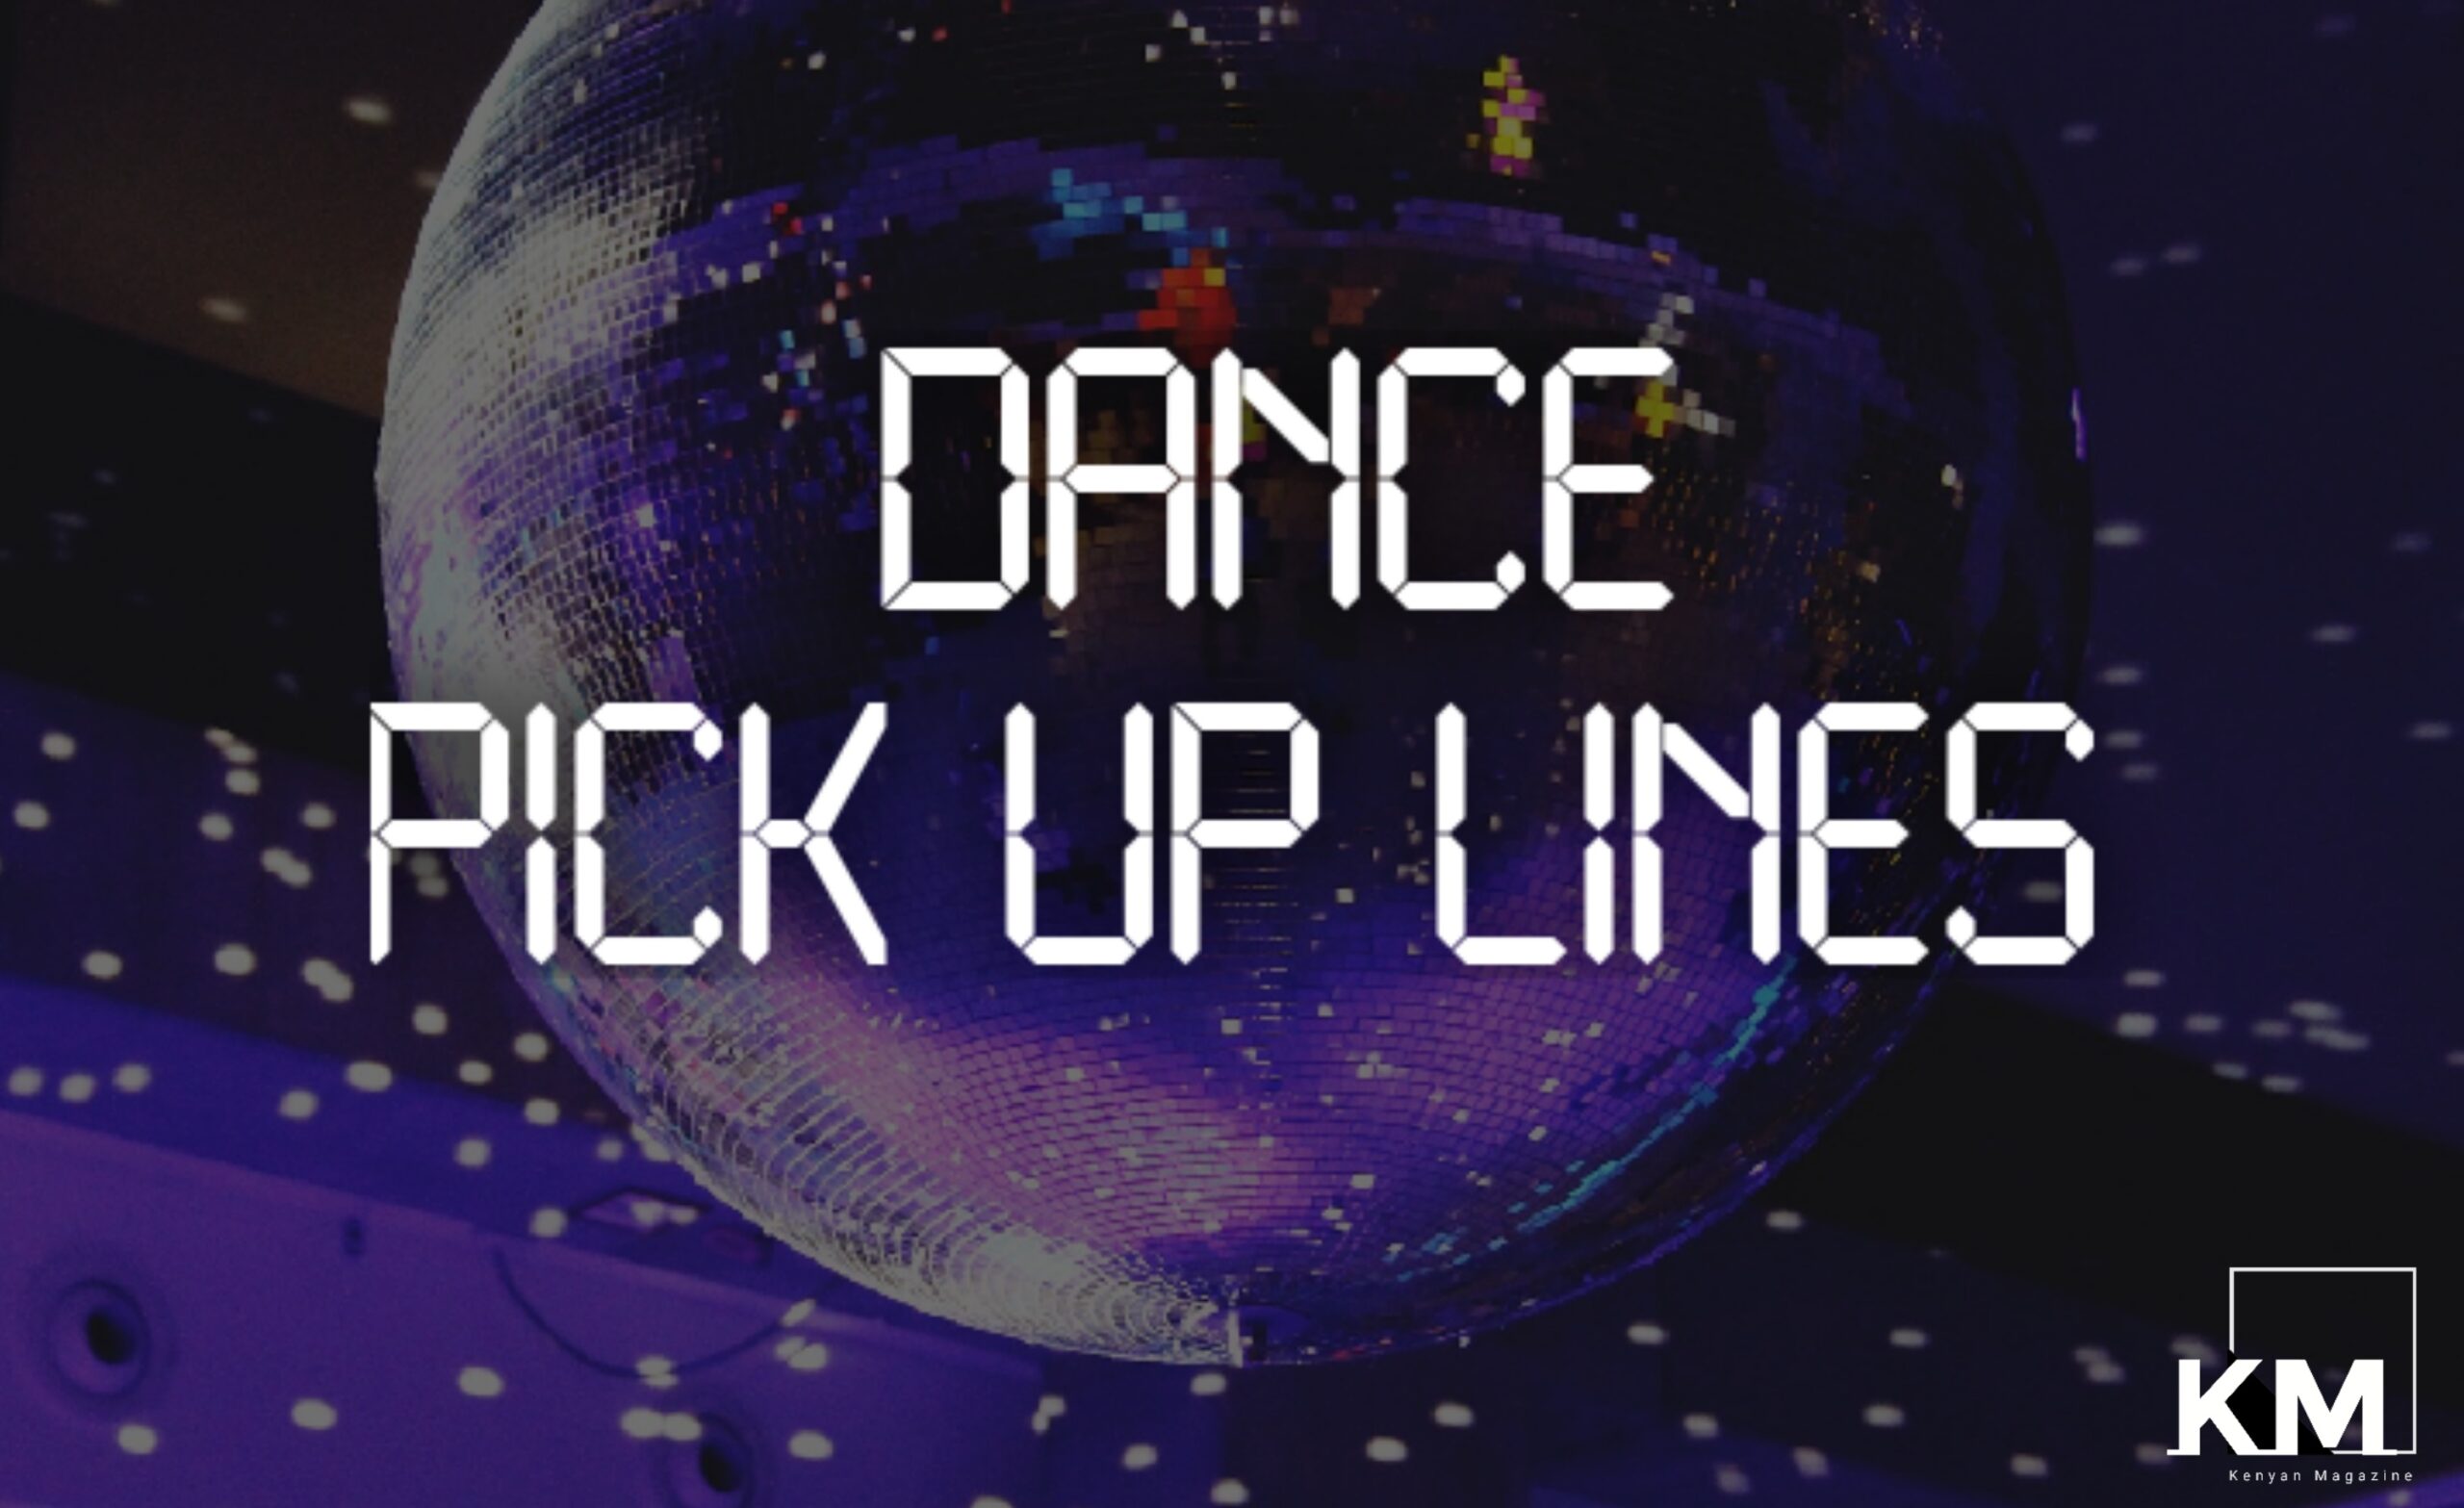 Dance pick up lines